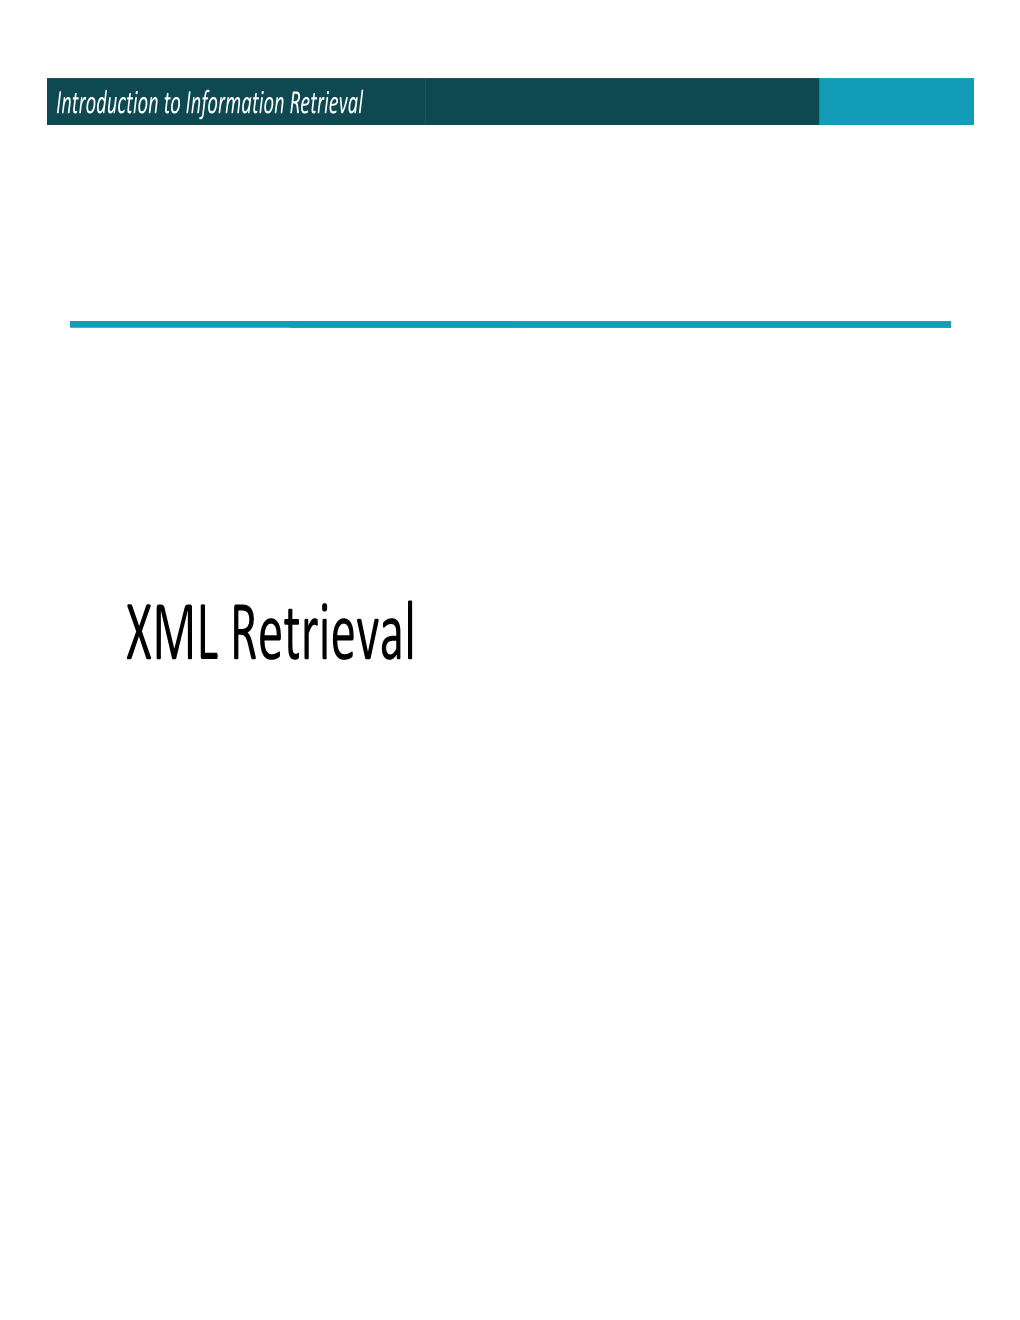 XML Retrieval Introduction to Information Retrieval